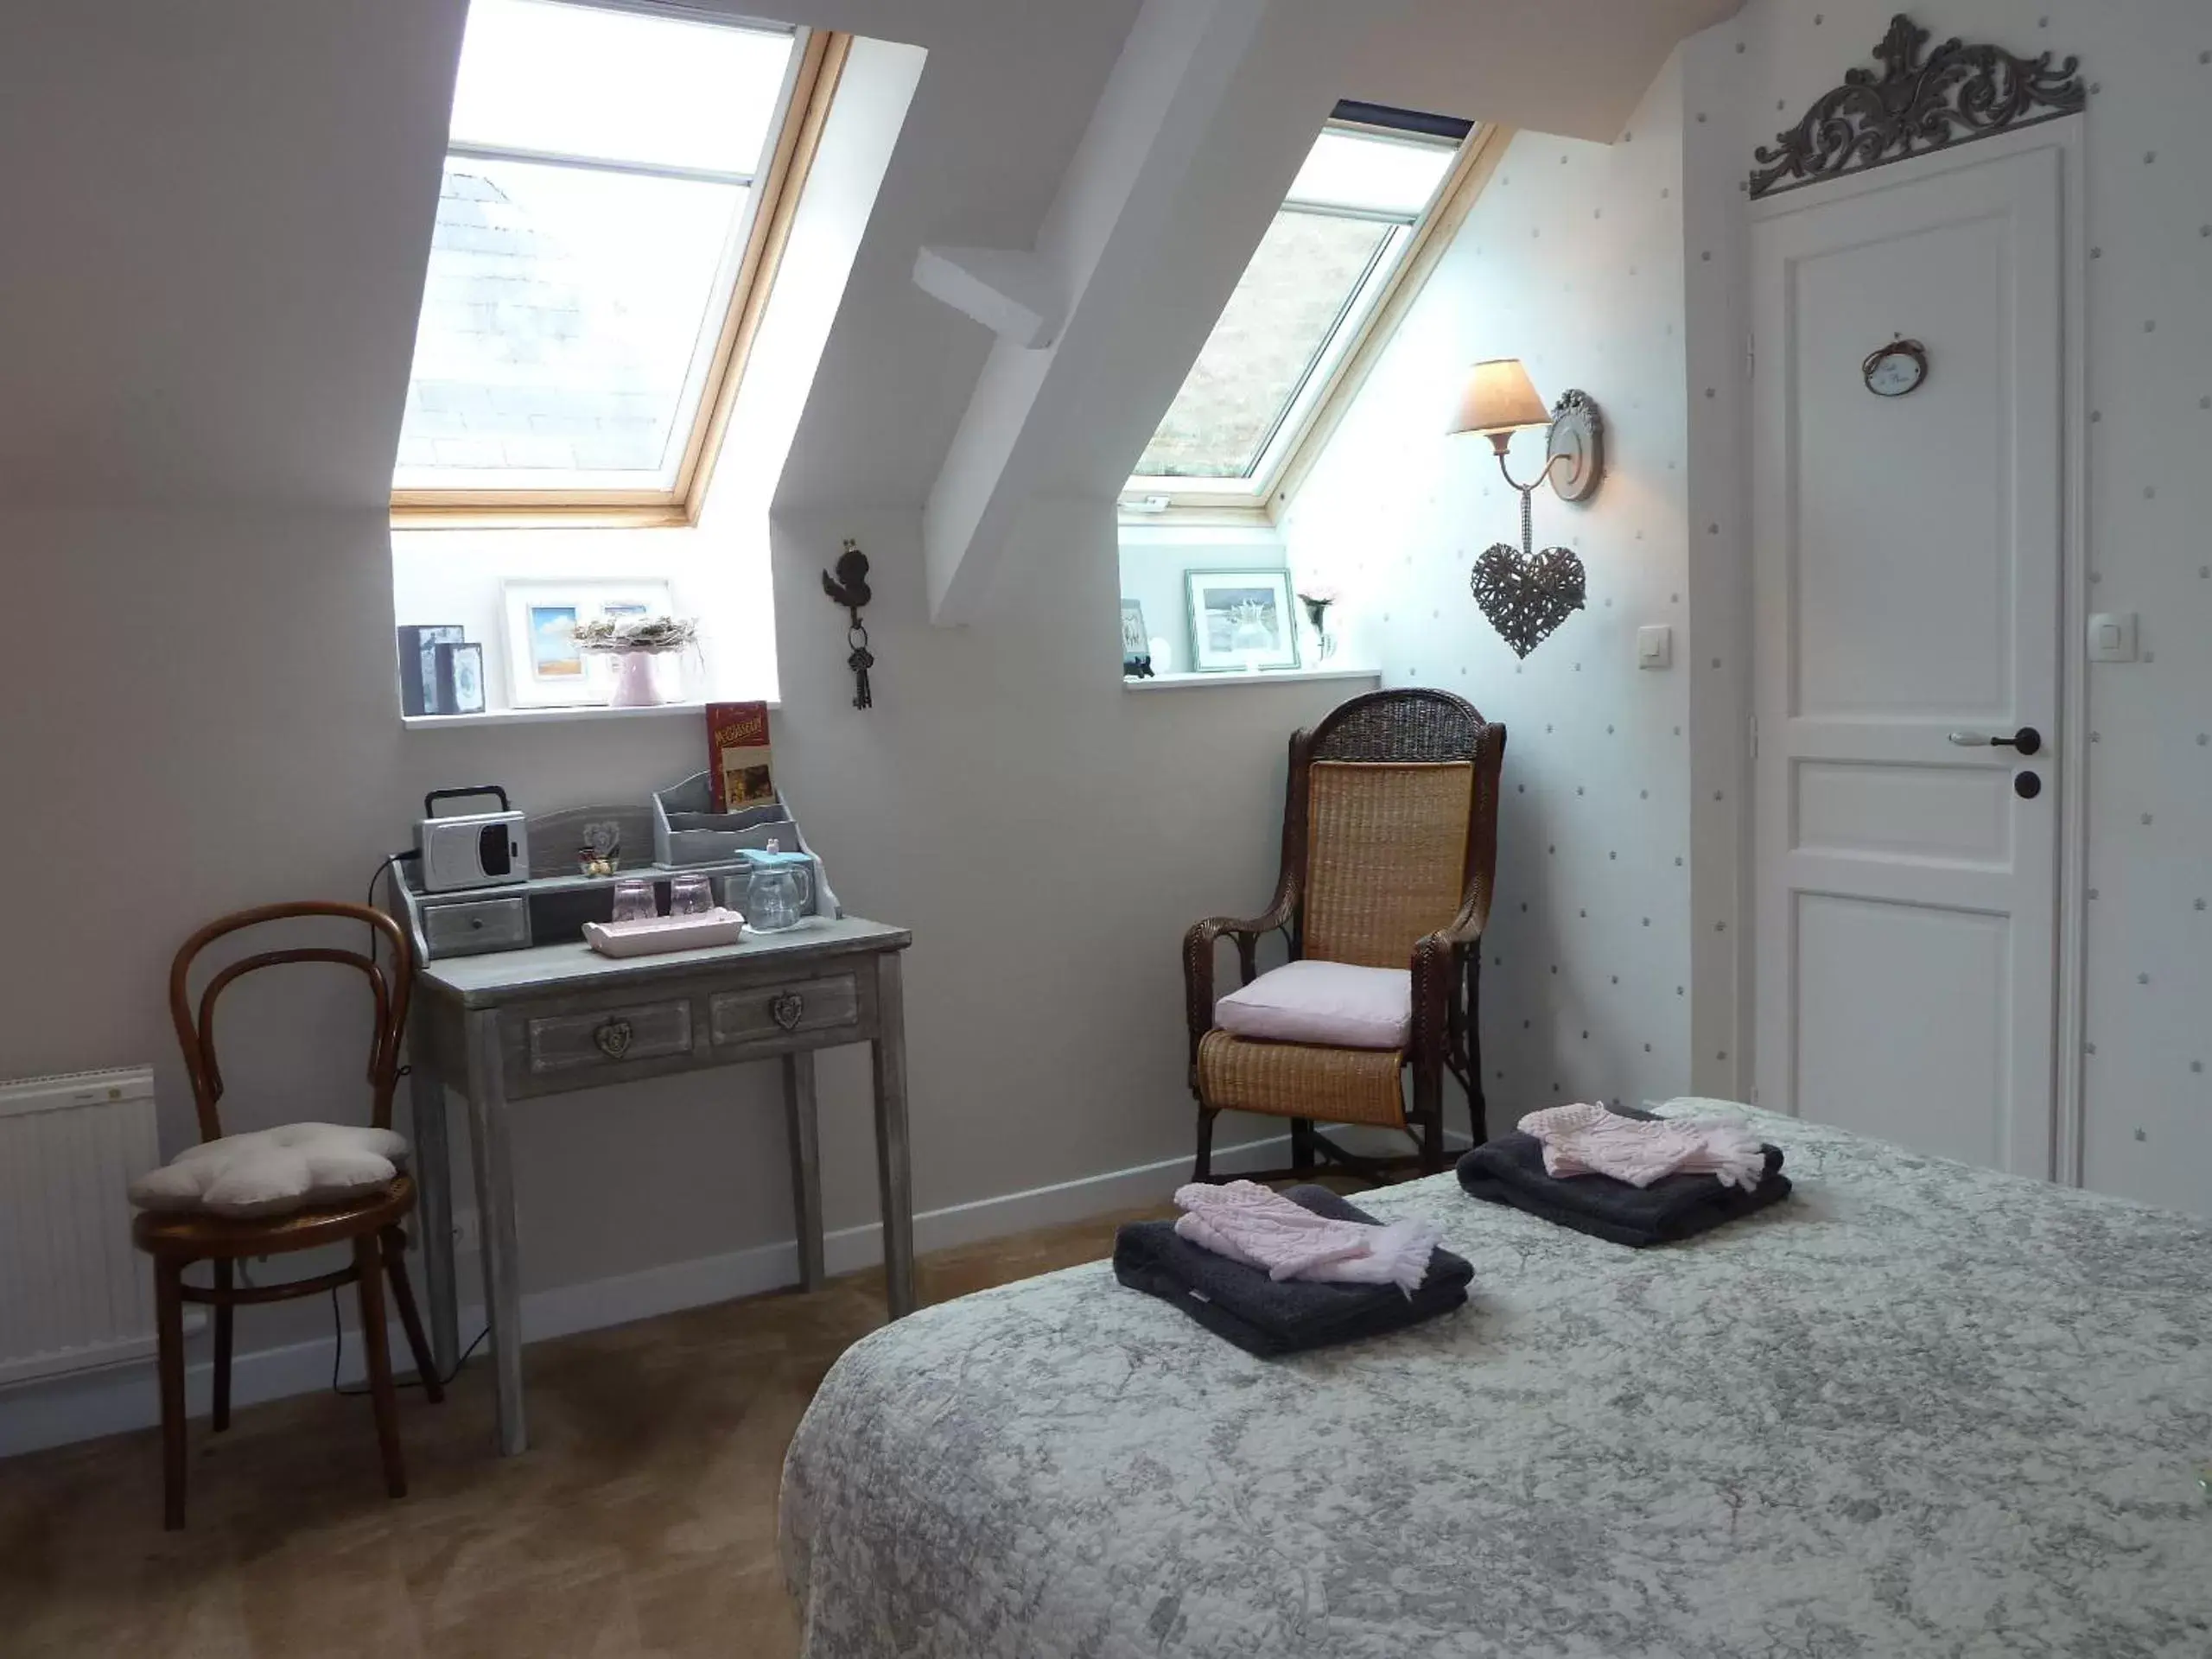 Bedroom in Manoir de Turqueville les Quatre Etoiles